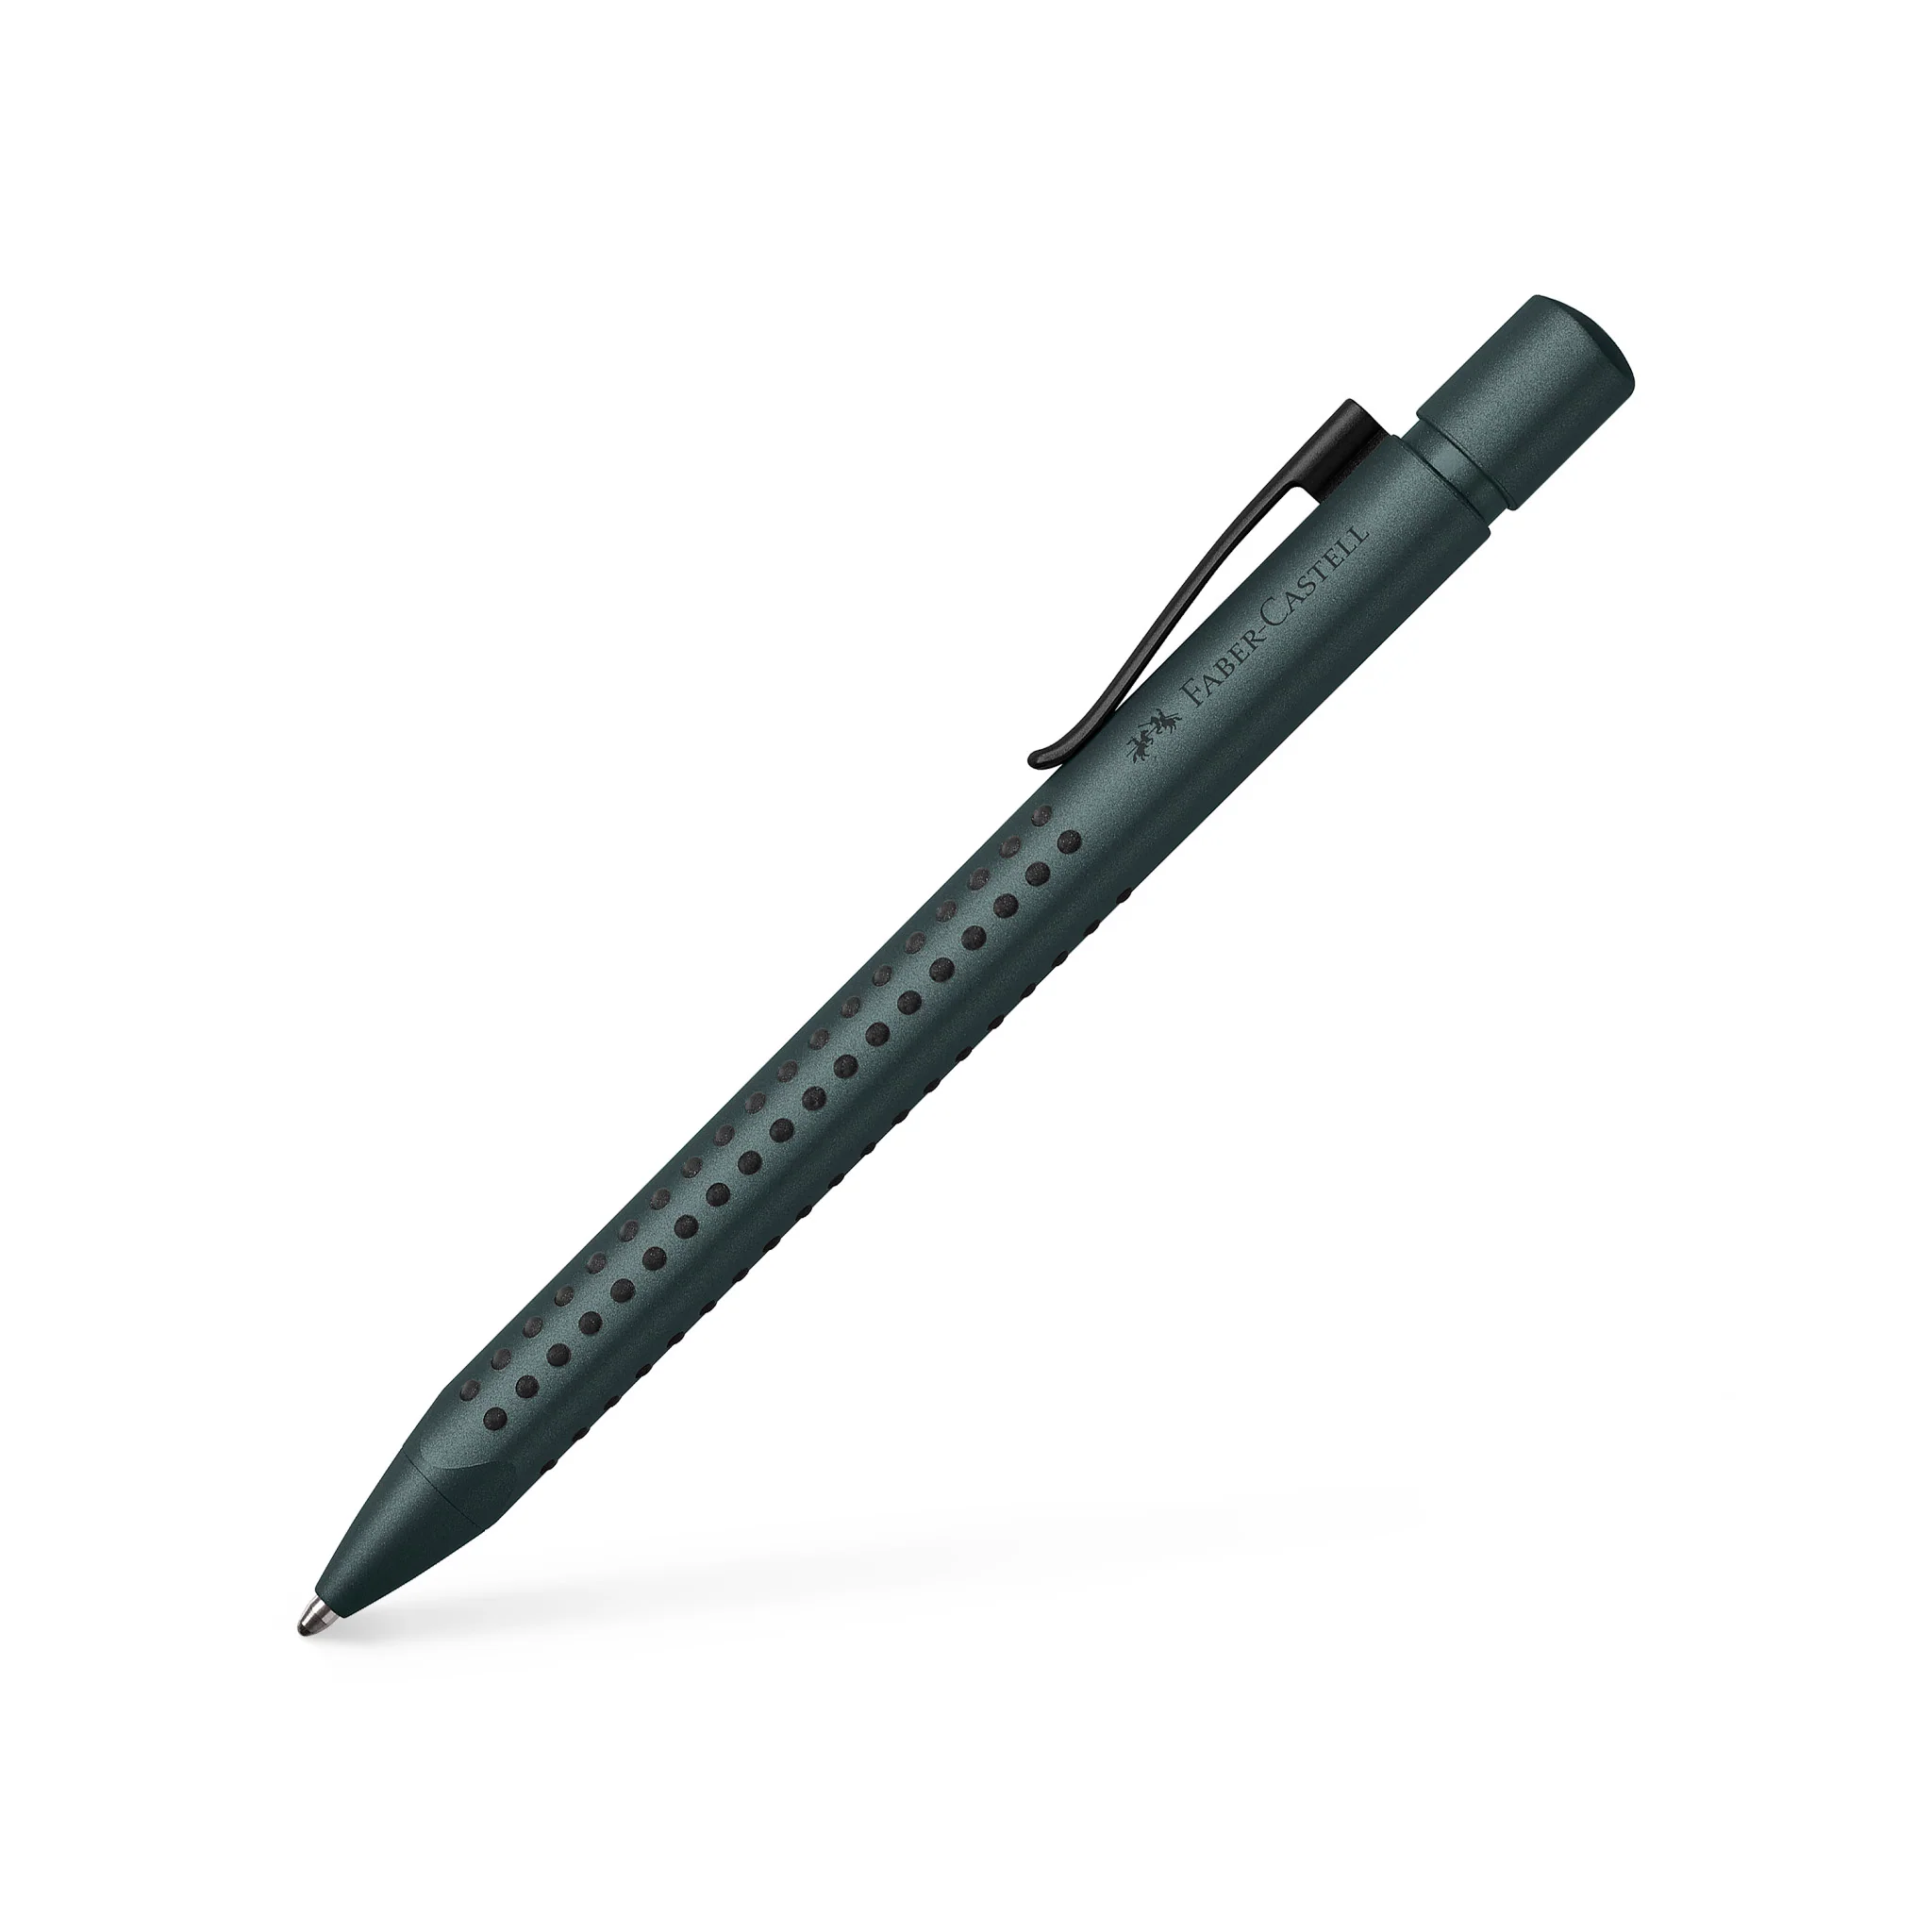 Image shows a green Faber-Castell ballpoint pen 